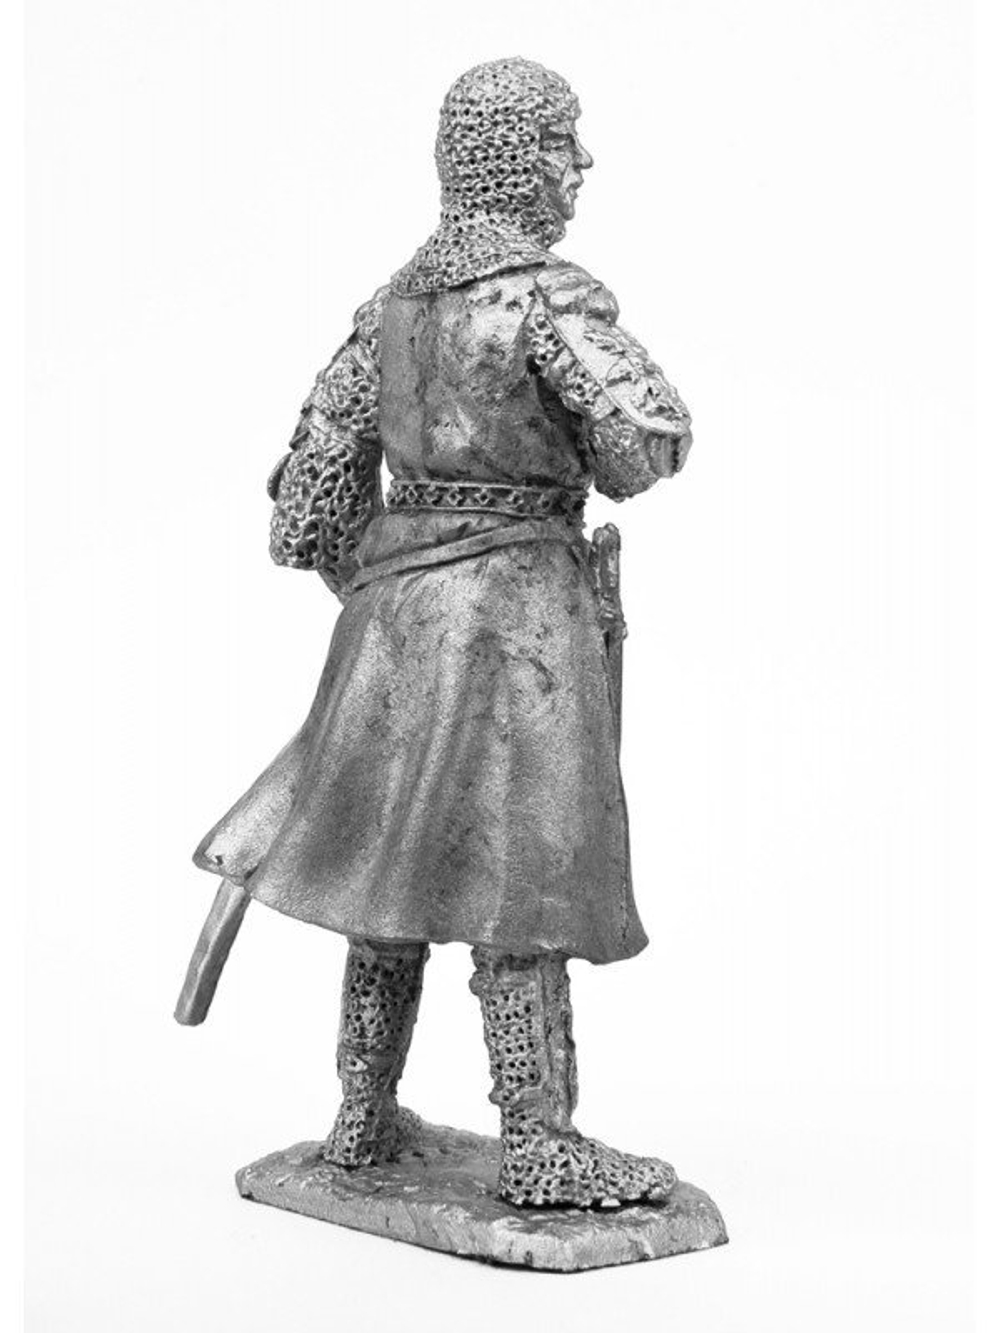 Оловянный солдатик Томазо Булданус, итальянский рыцарь